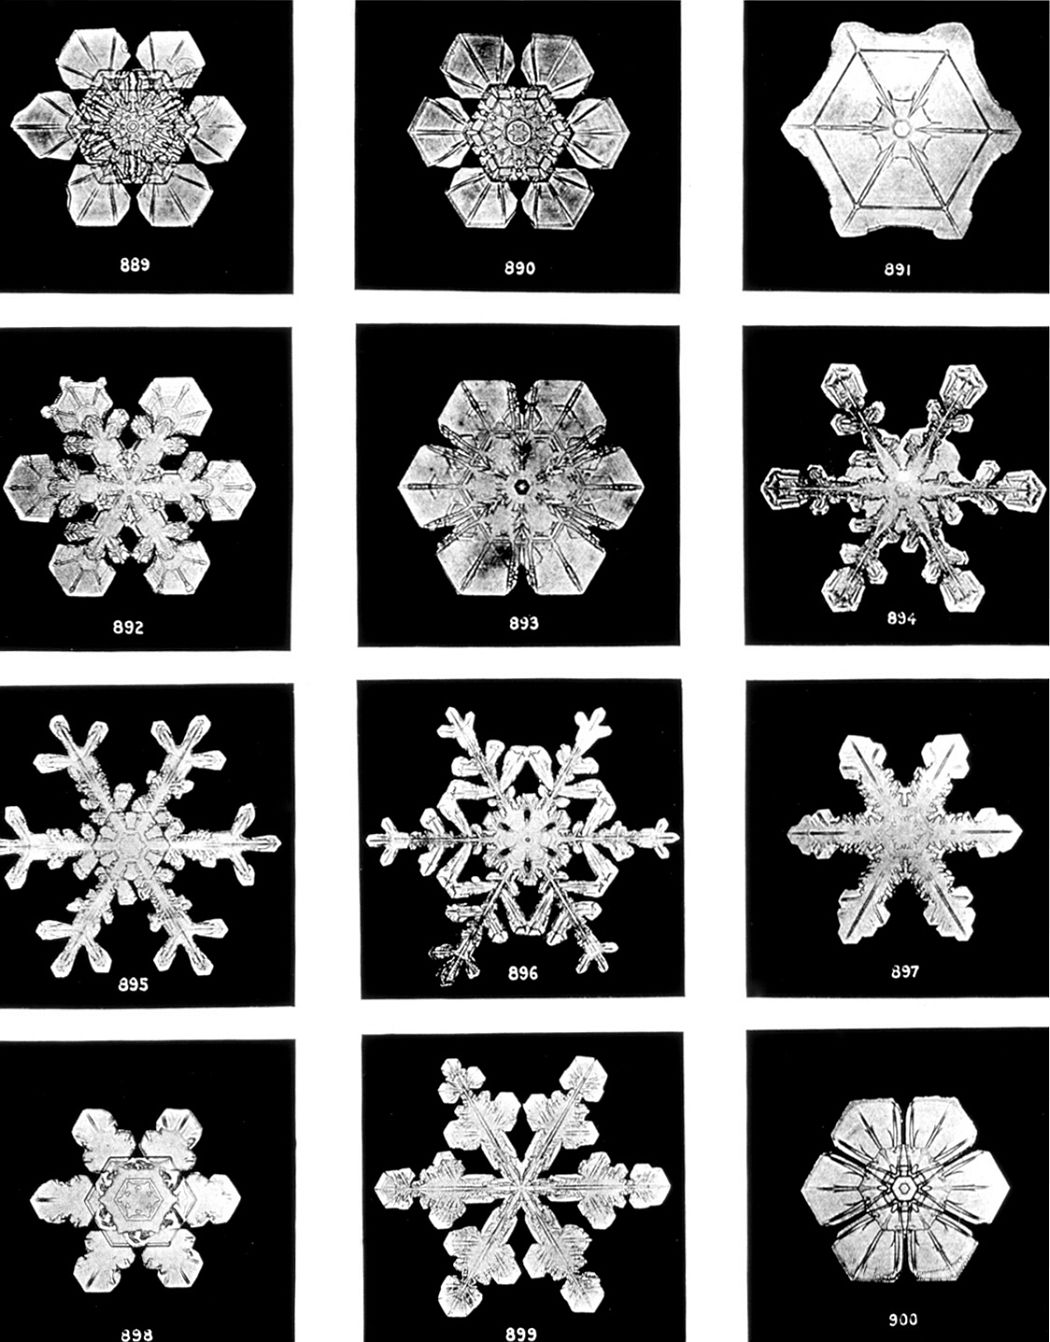 Snowflakes - Wilson Bentley